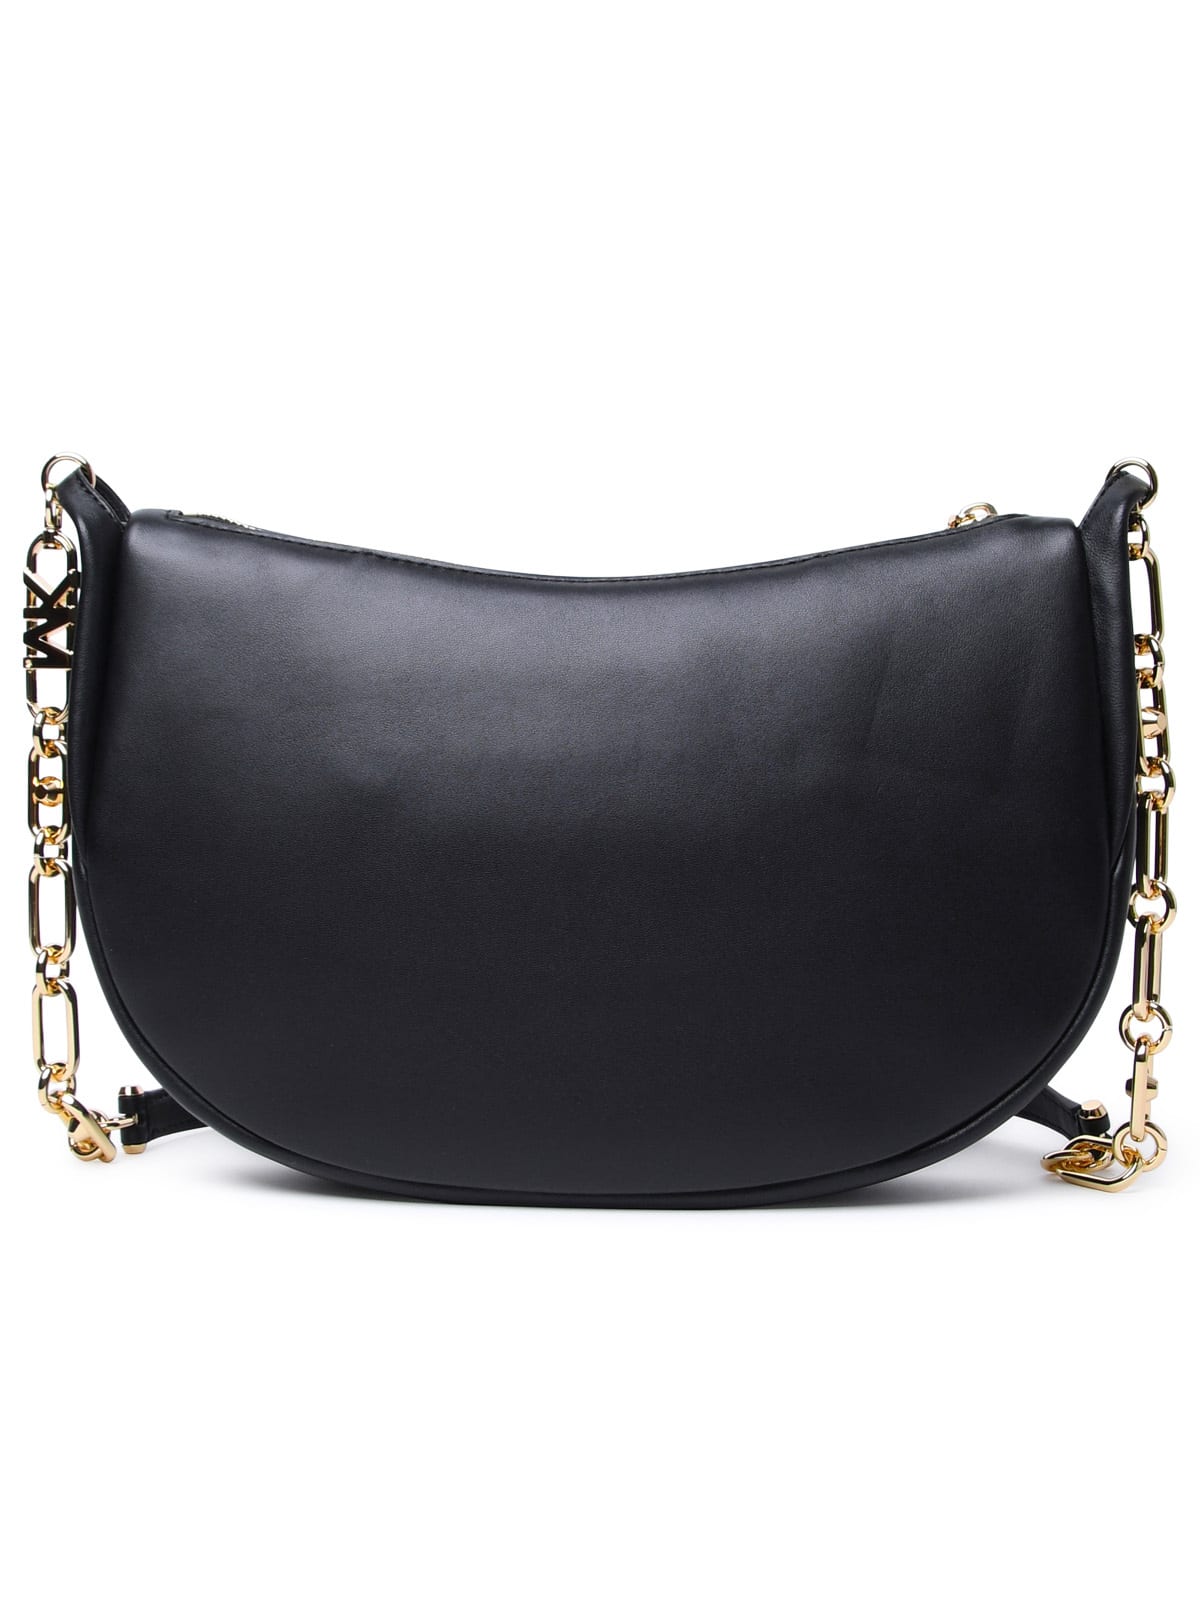 Shop Michael Michael Kors Black Leather Kendall Bag